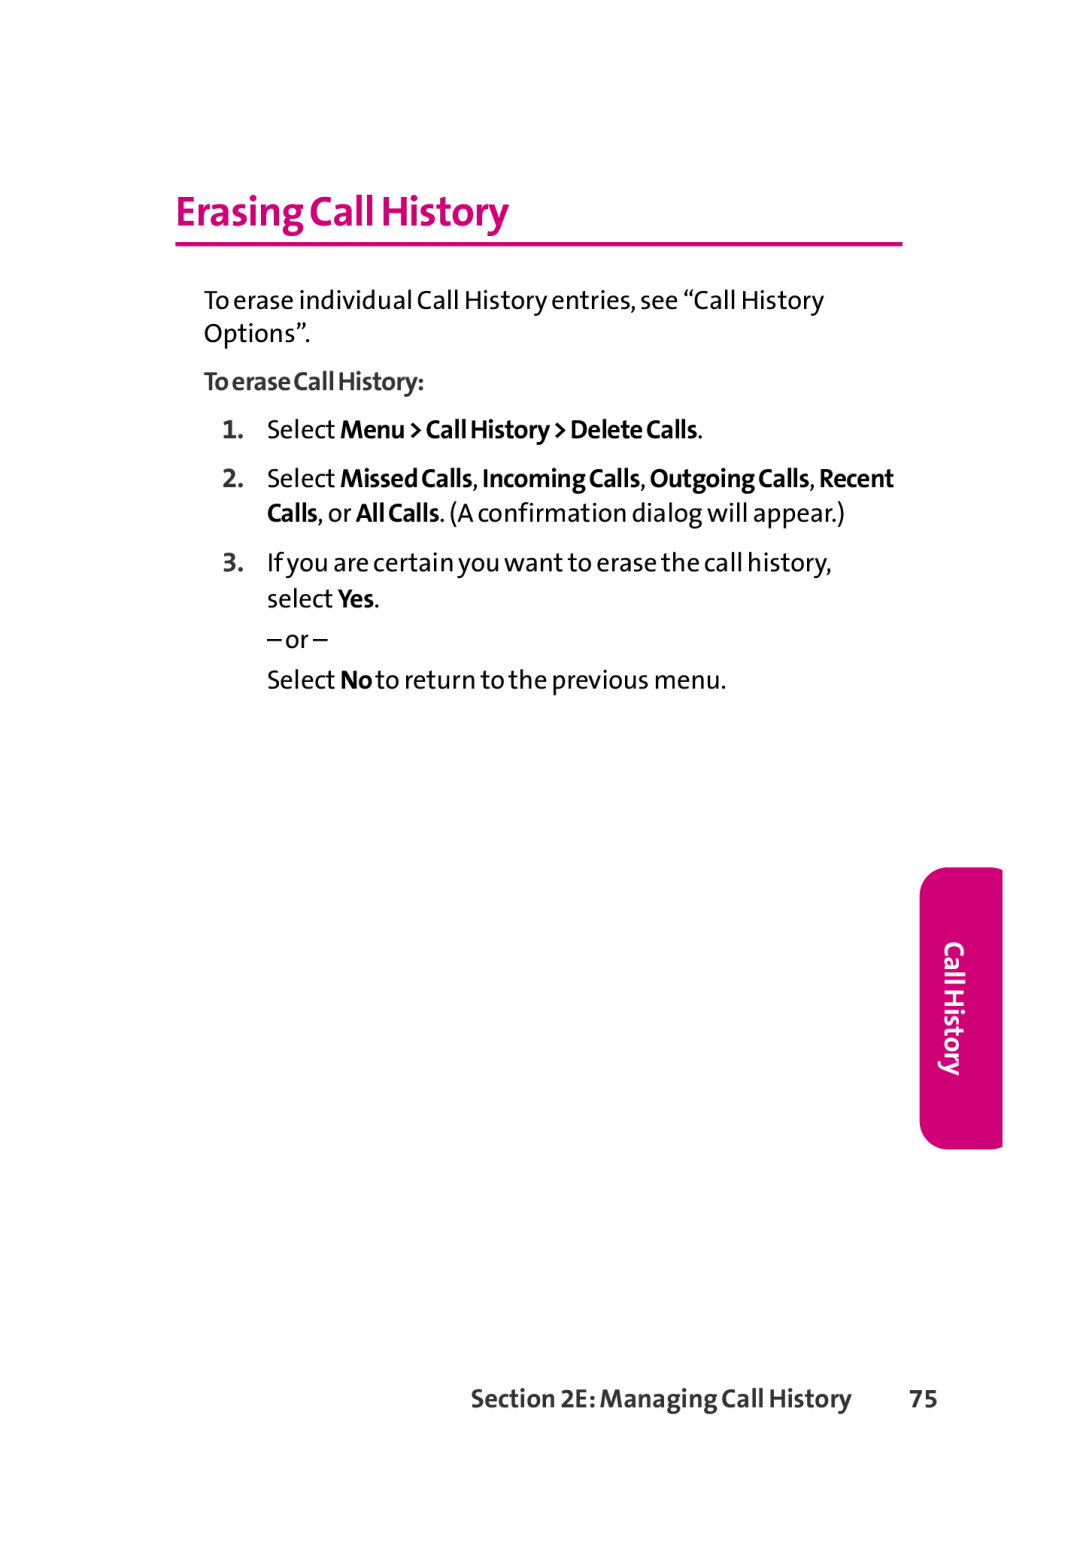 LG Electronics 350 ErasingCall History, ToeraseCallHistory, Select MenuCallHistoryDeleteCalls, E Managing Call History 